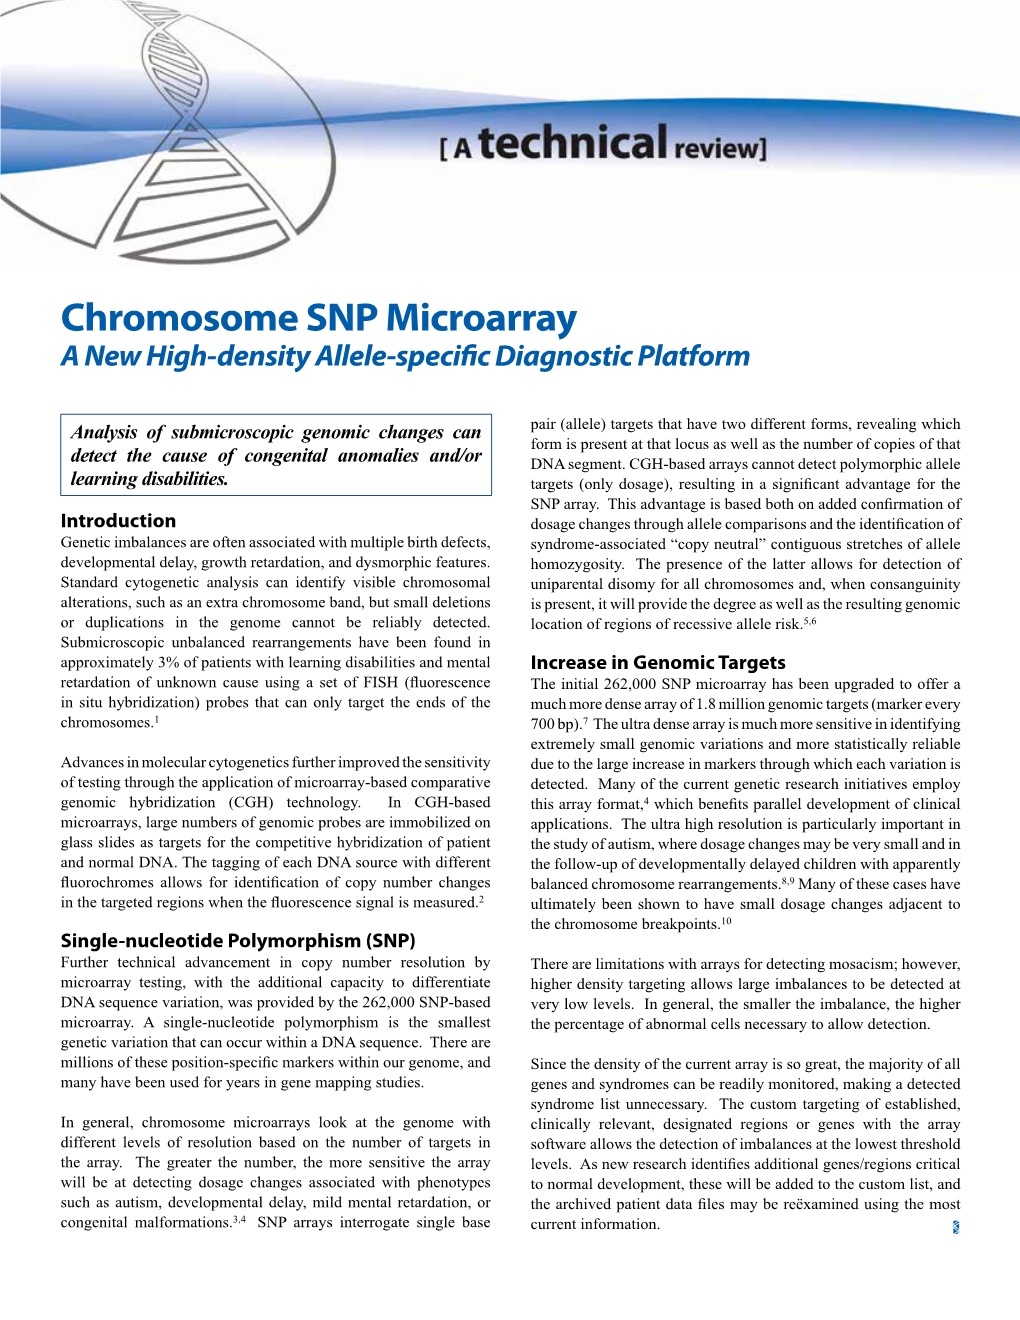 Chromosome SNP Microarray a New High-Density Allele-Specific Diagnostic Platform